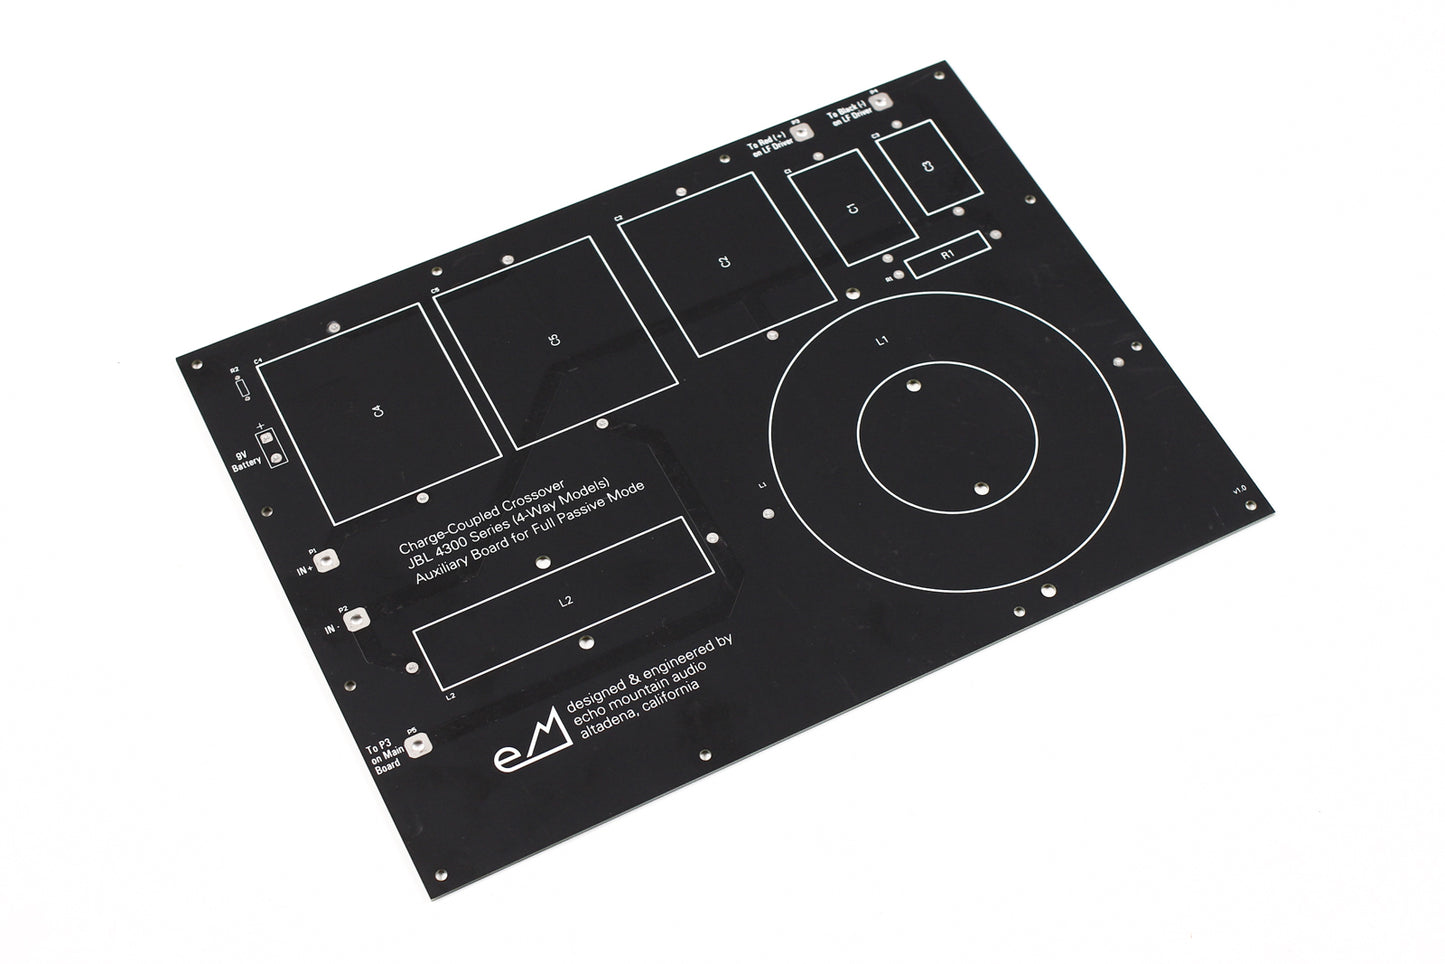 Full Board Set for JBL 4300 Series 4-way Models